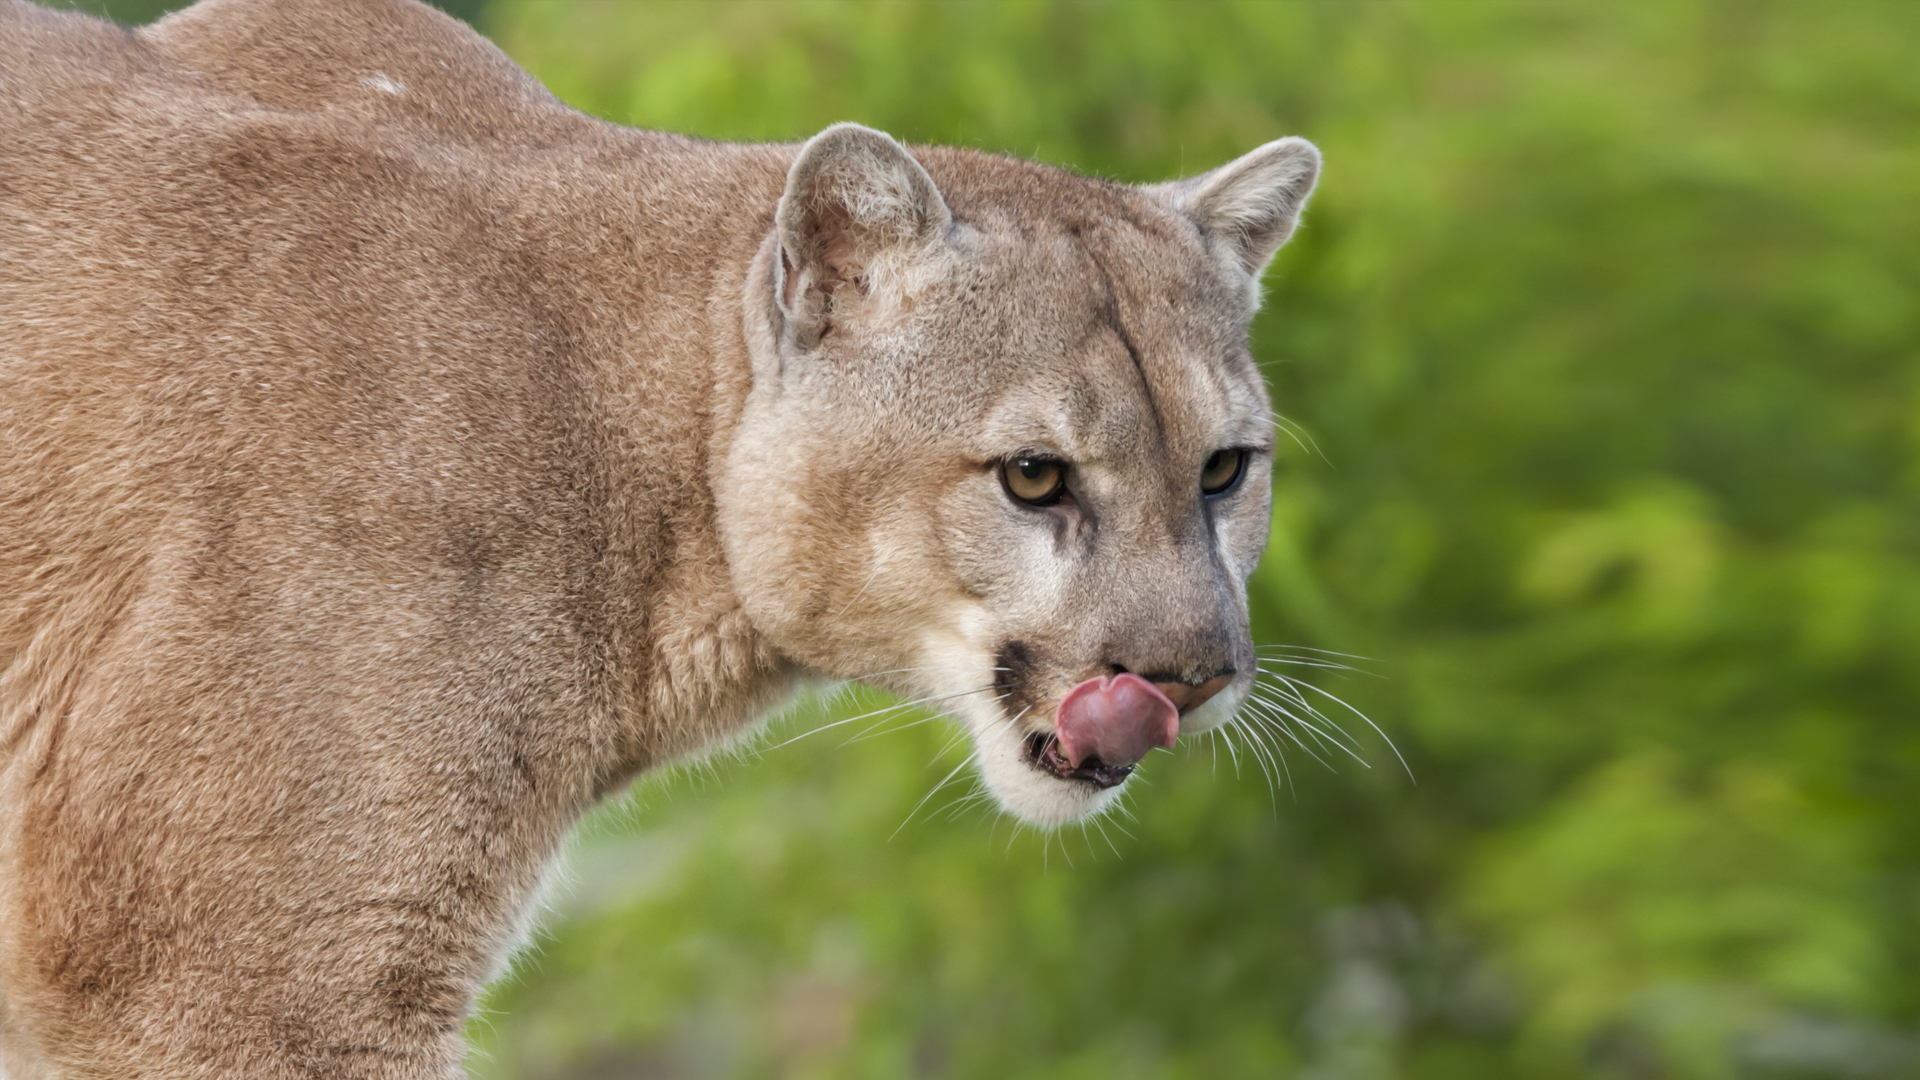 Benadering Broek seks Mountain Lion (Puma, Cougar) | San Diego Zoo Animals & Plants